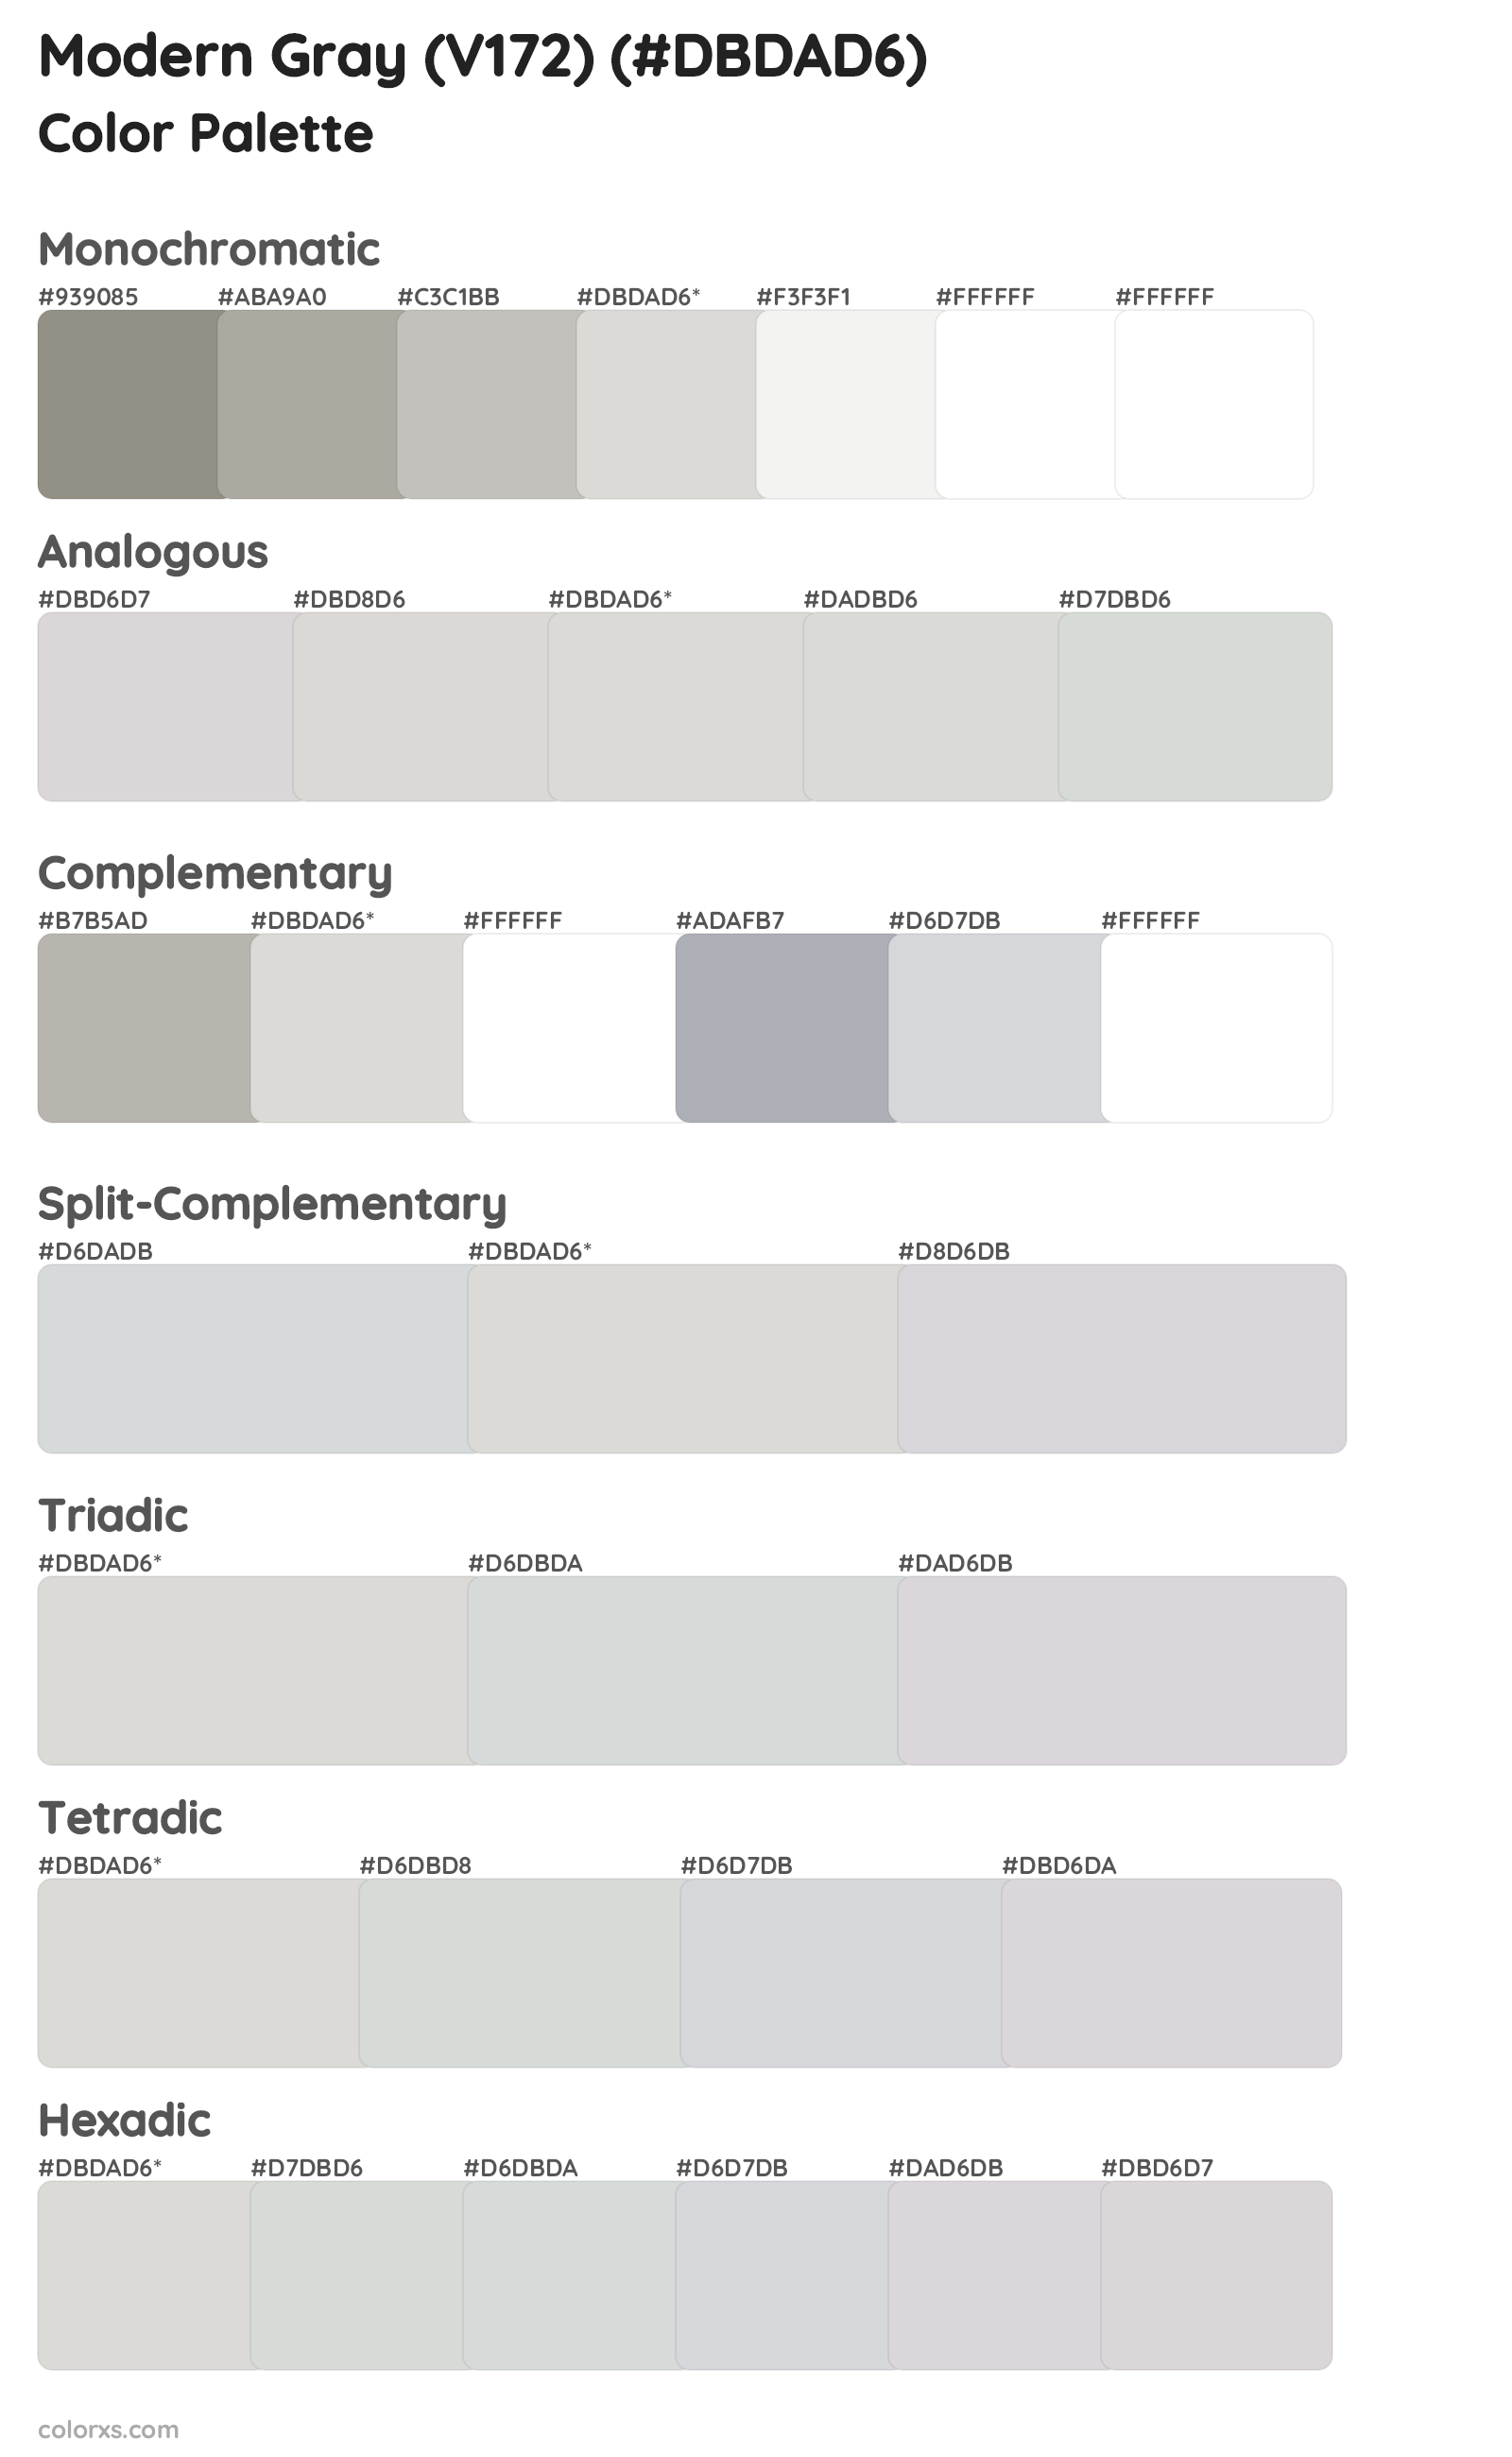 Modern Gray (V172) Color Scheme Palettes